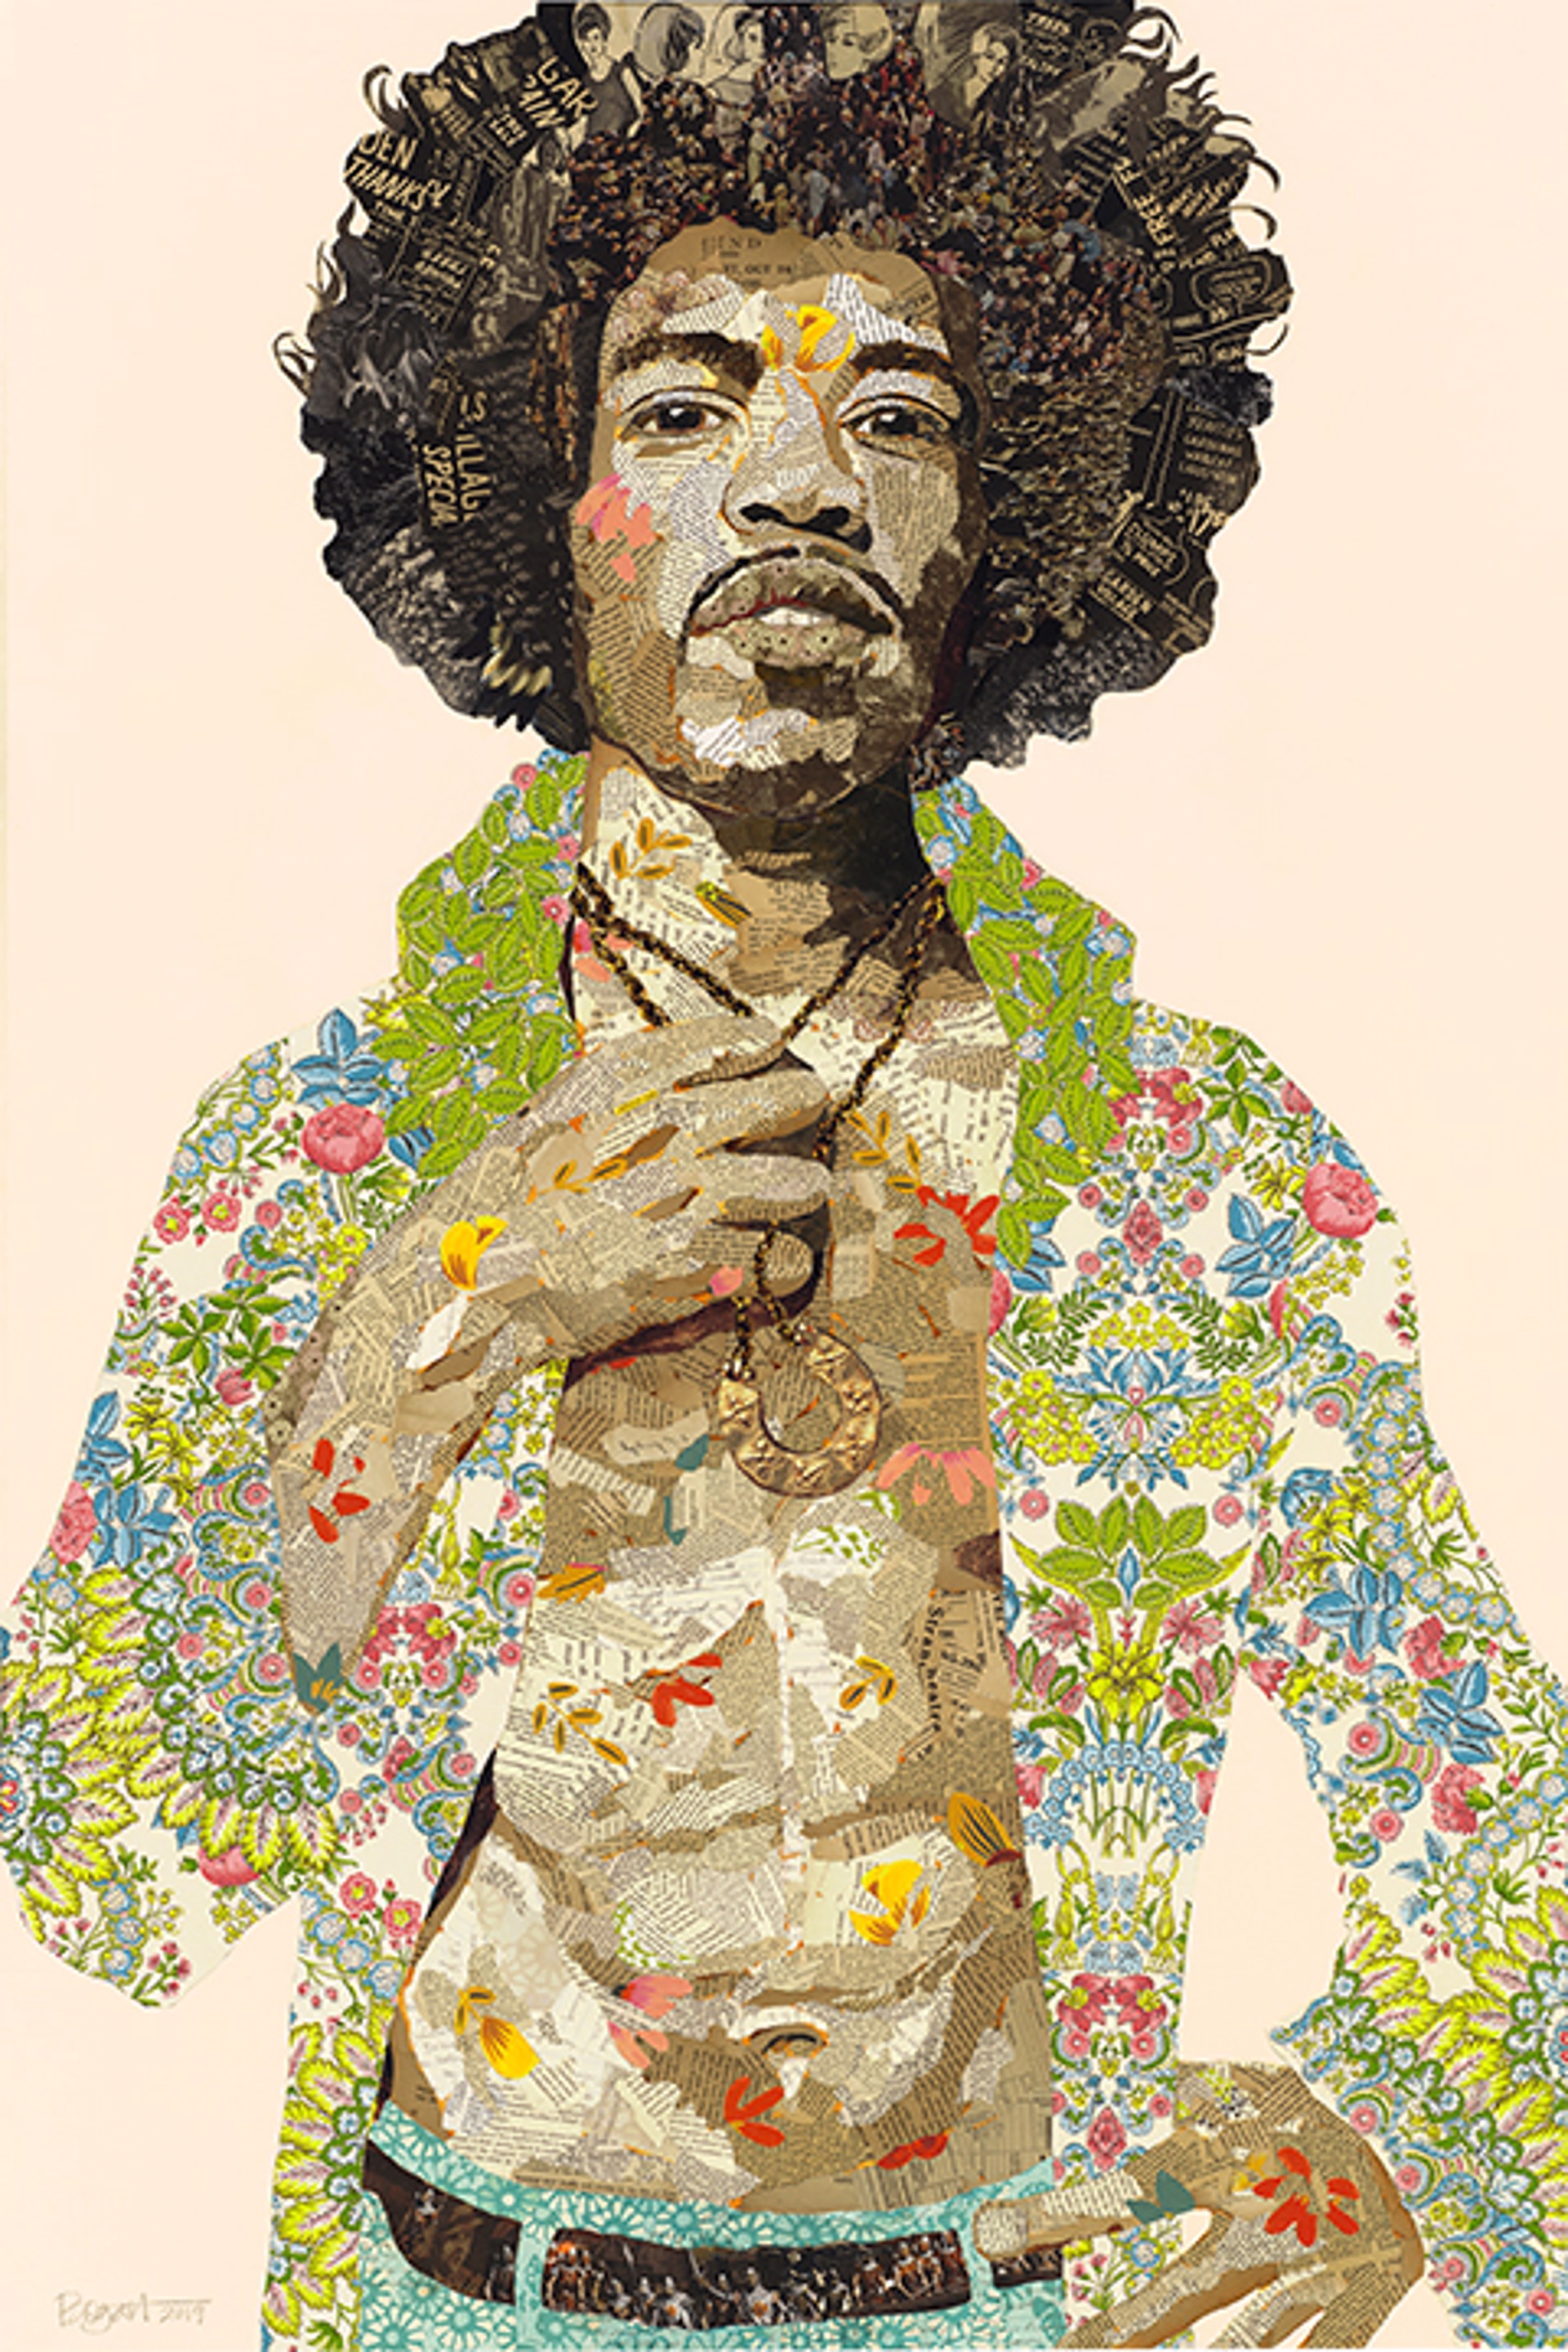 Jimi Hendrix by Brenda Bogart - Prints